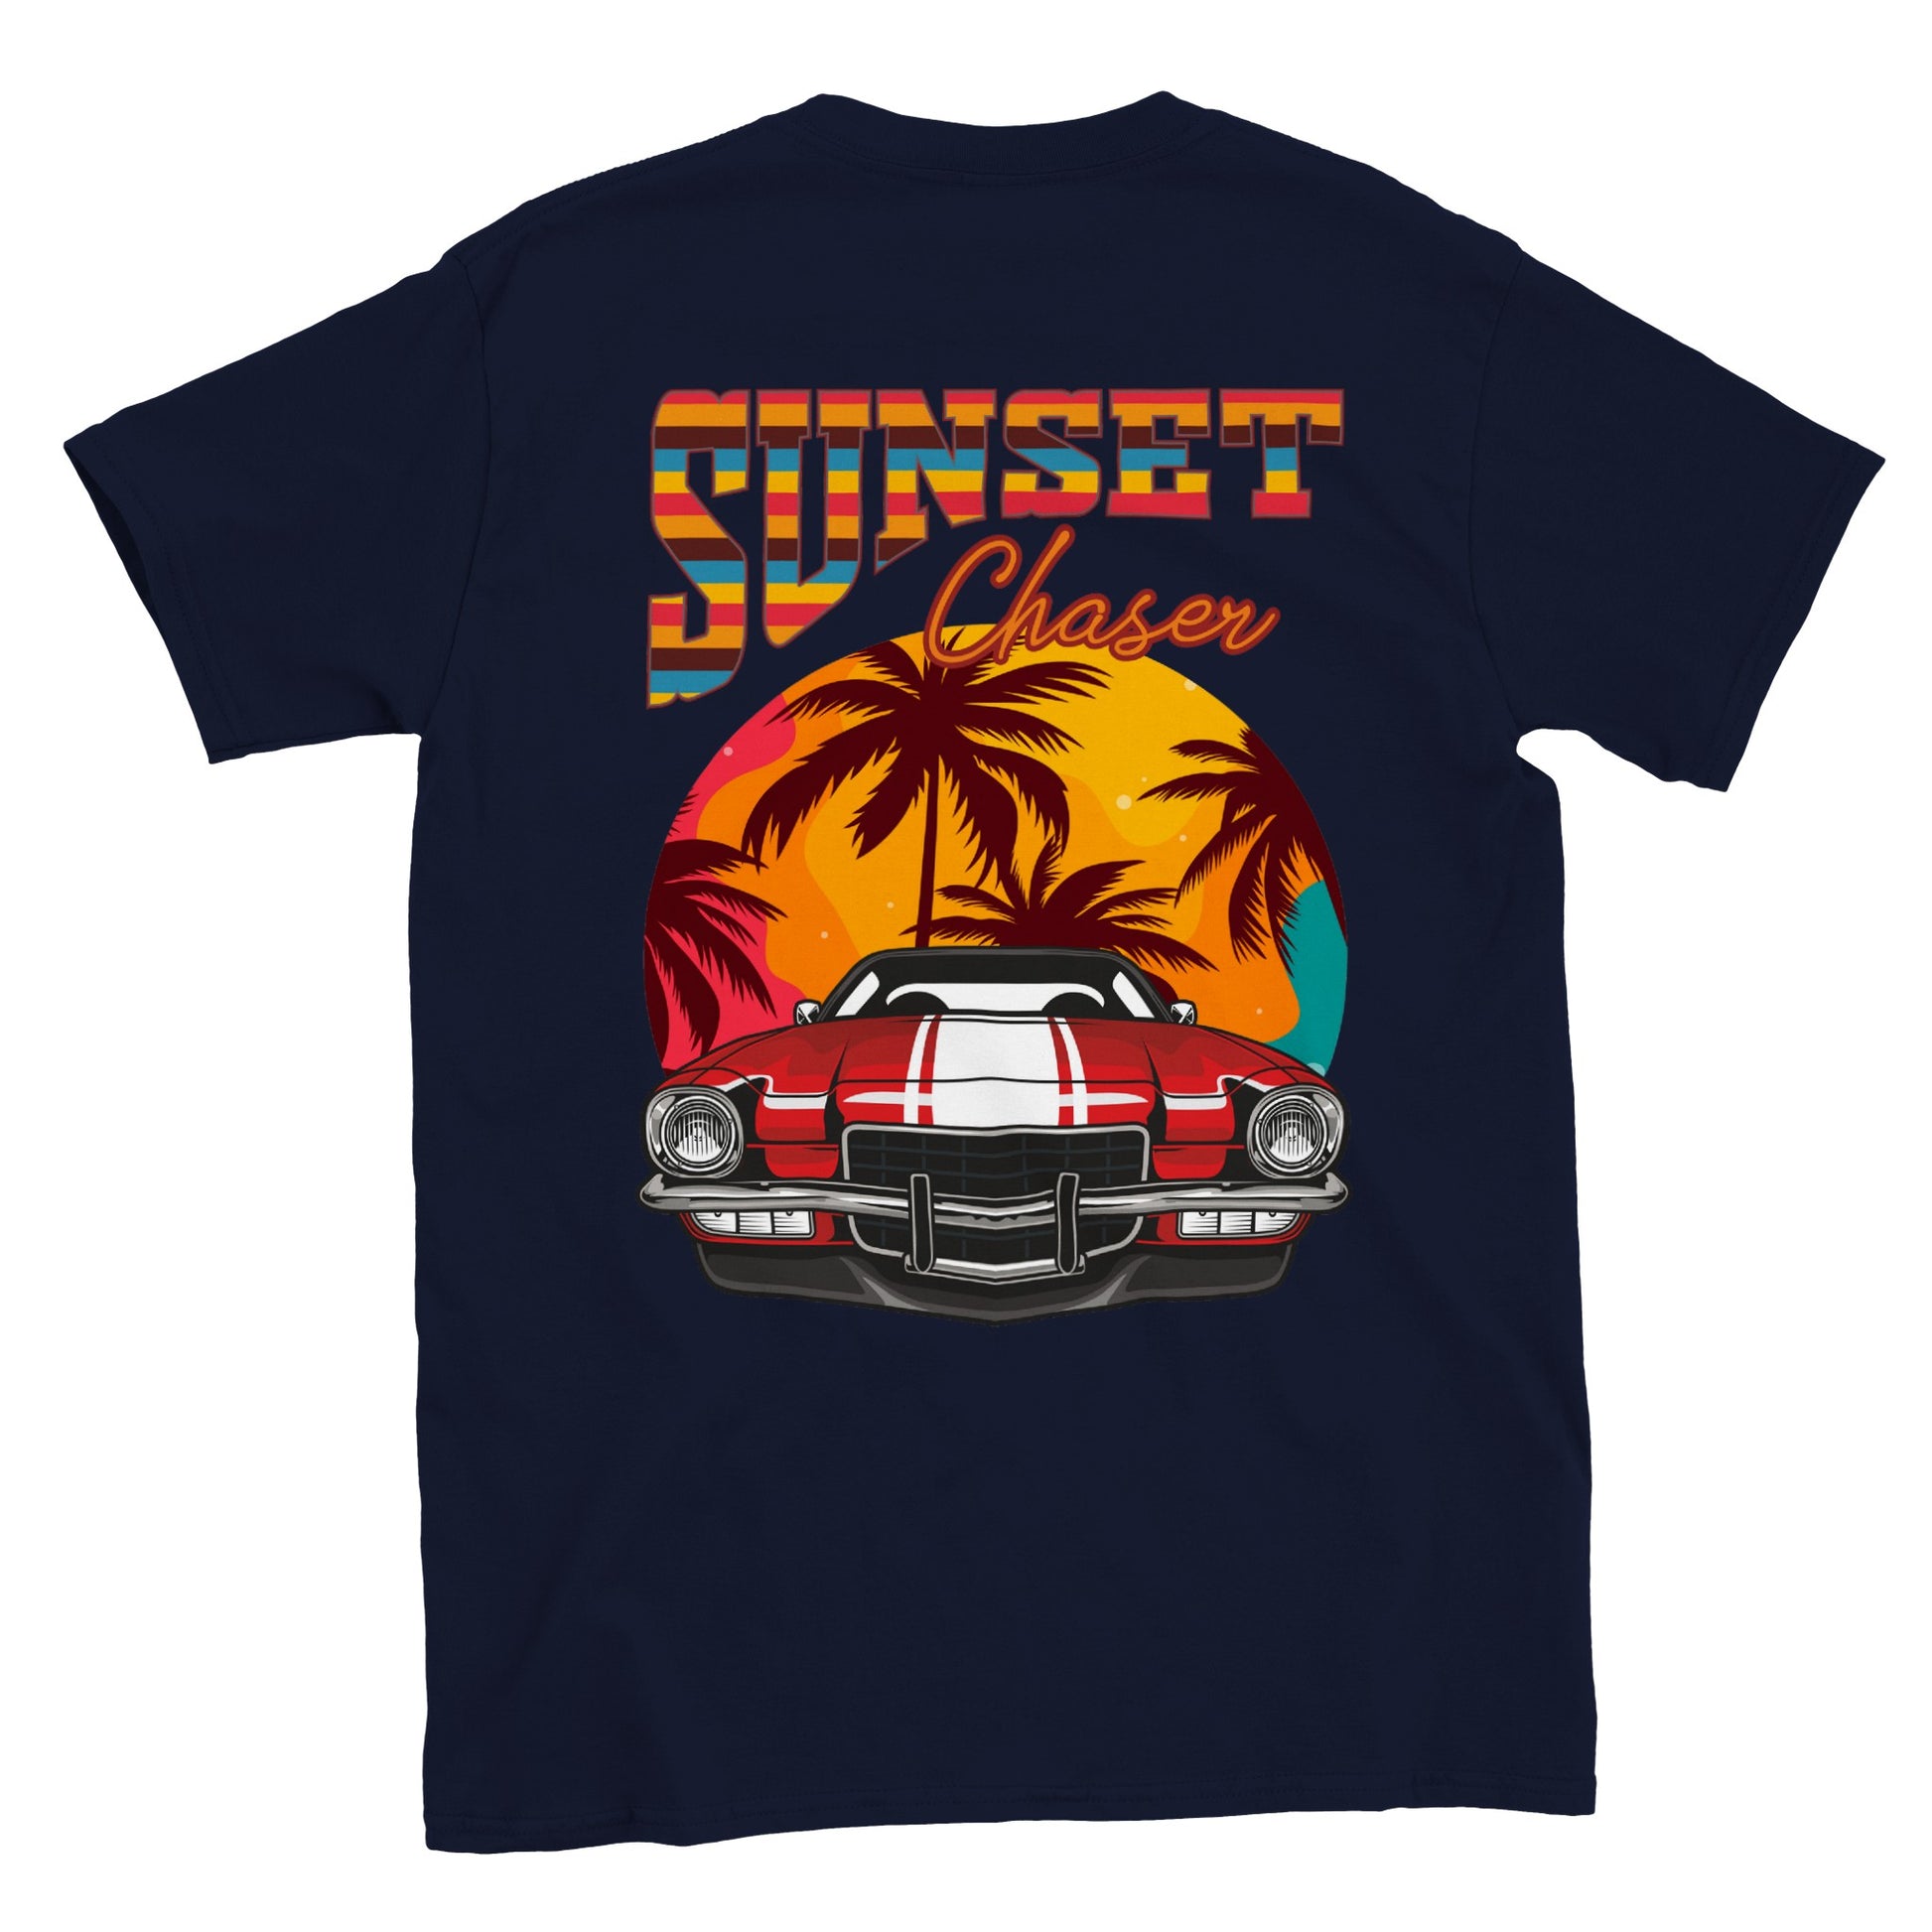 Sunset Chaser - Camaro - Classic Unisex Crewneck T-shirt - Mister Snarky's